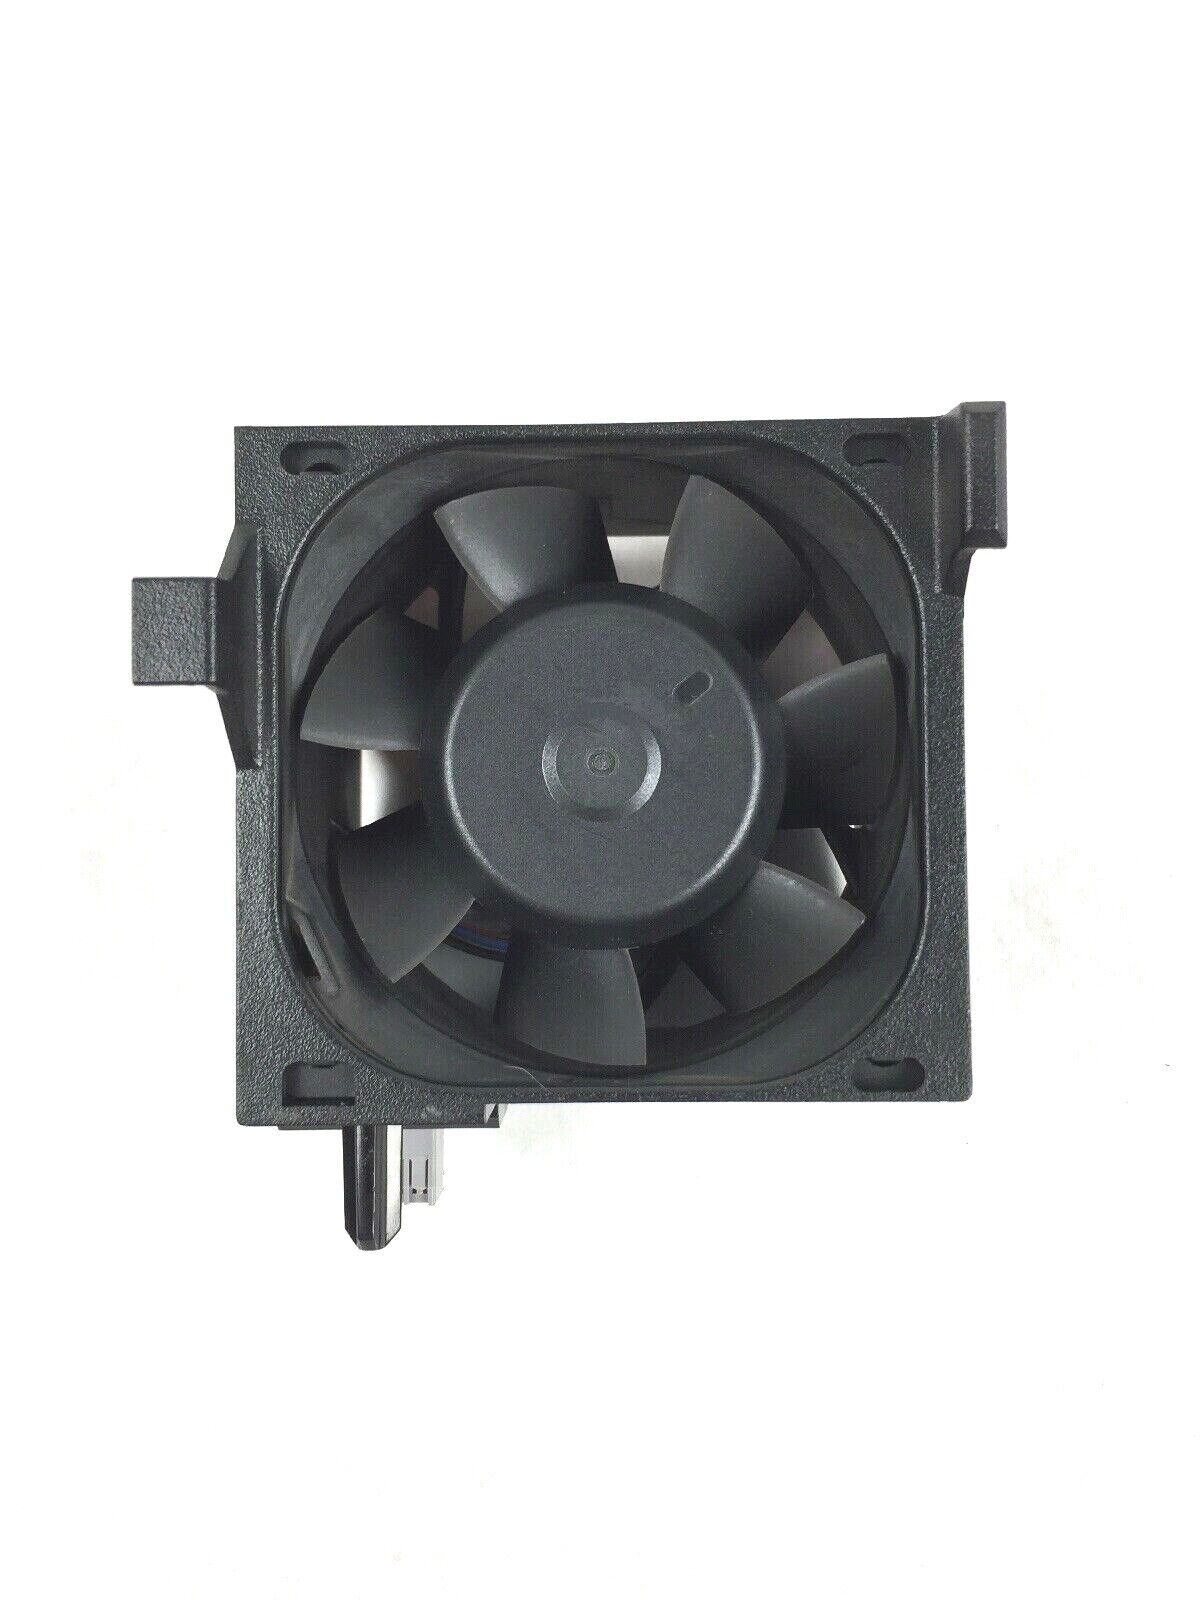 Dell PowerEdge 2950 Cooling Fan SANYO 9G0612P1J0318 YW880 PR272